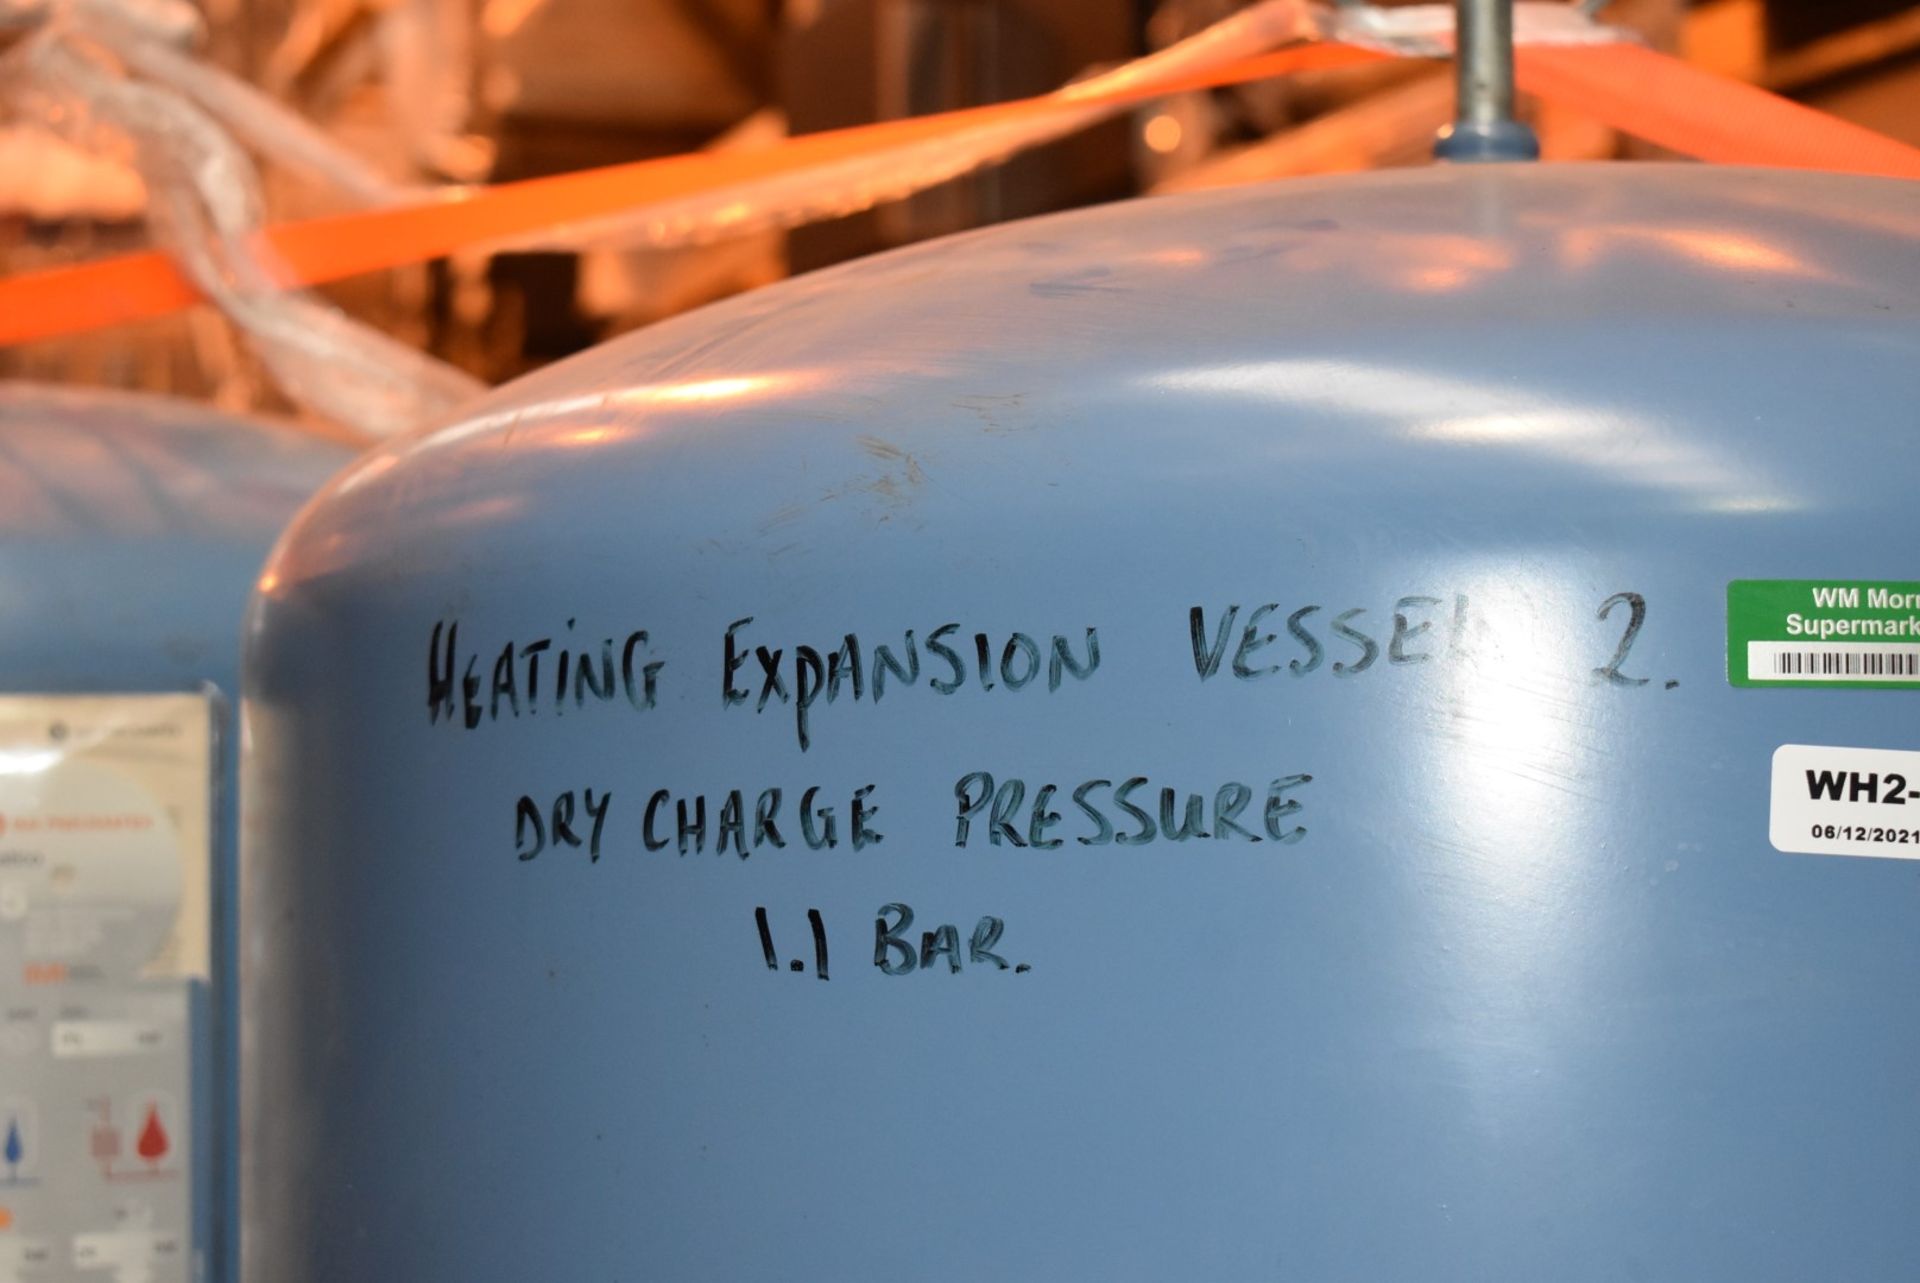 1 x Pneumatex Statico 500L 6 Bar Pressure Expansion Vessel - Product Code: SU 500.6 - RRP £1,678 - - Image 6 of 7